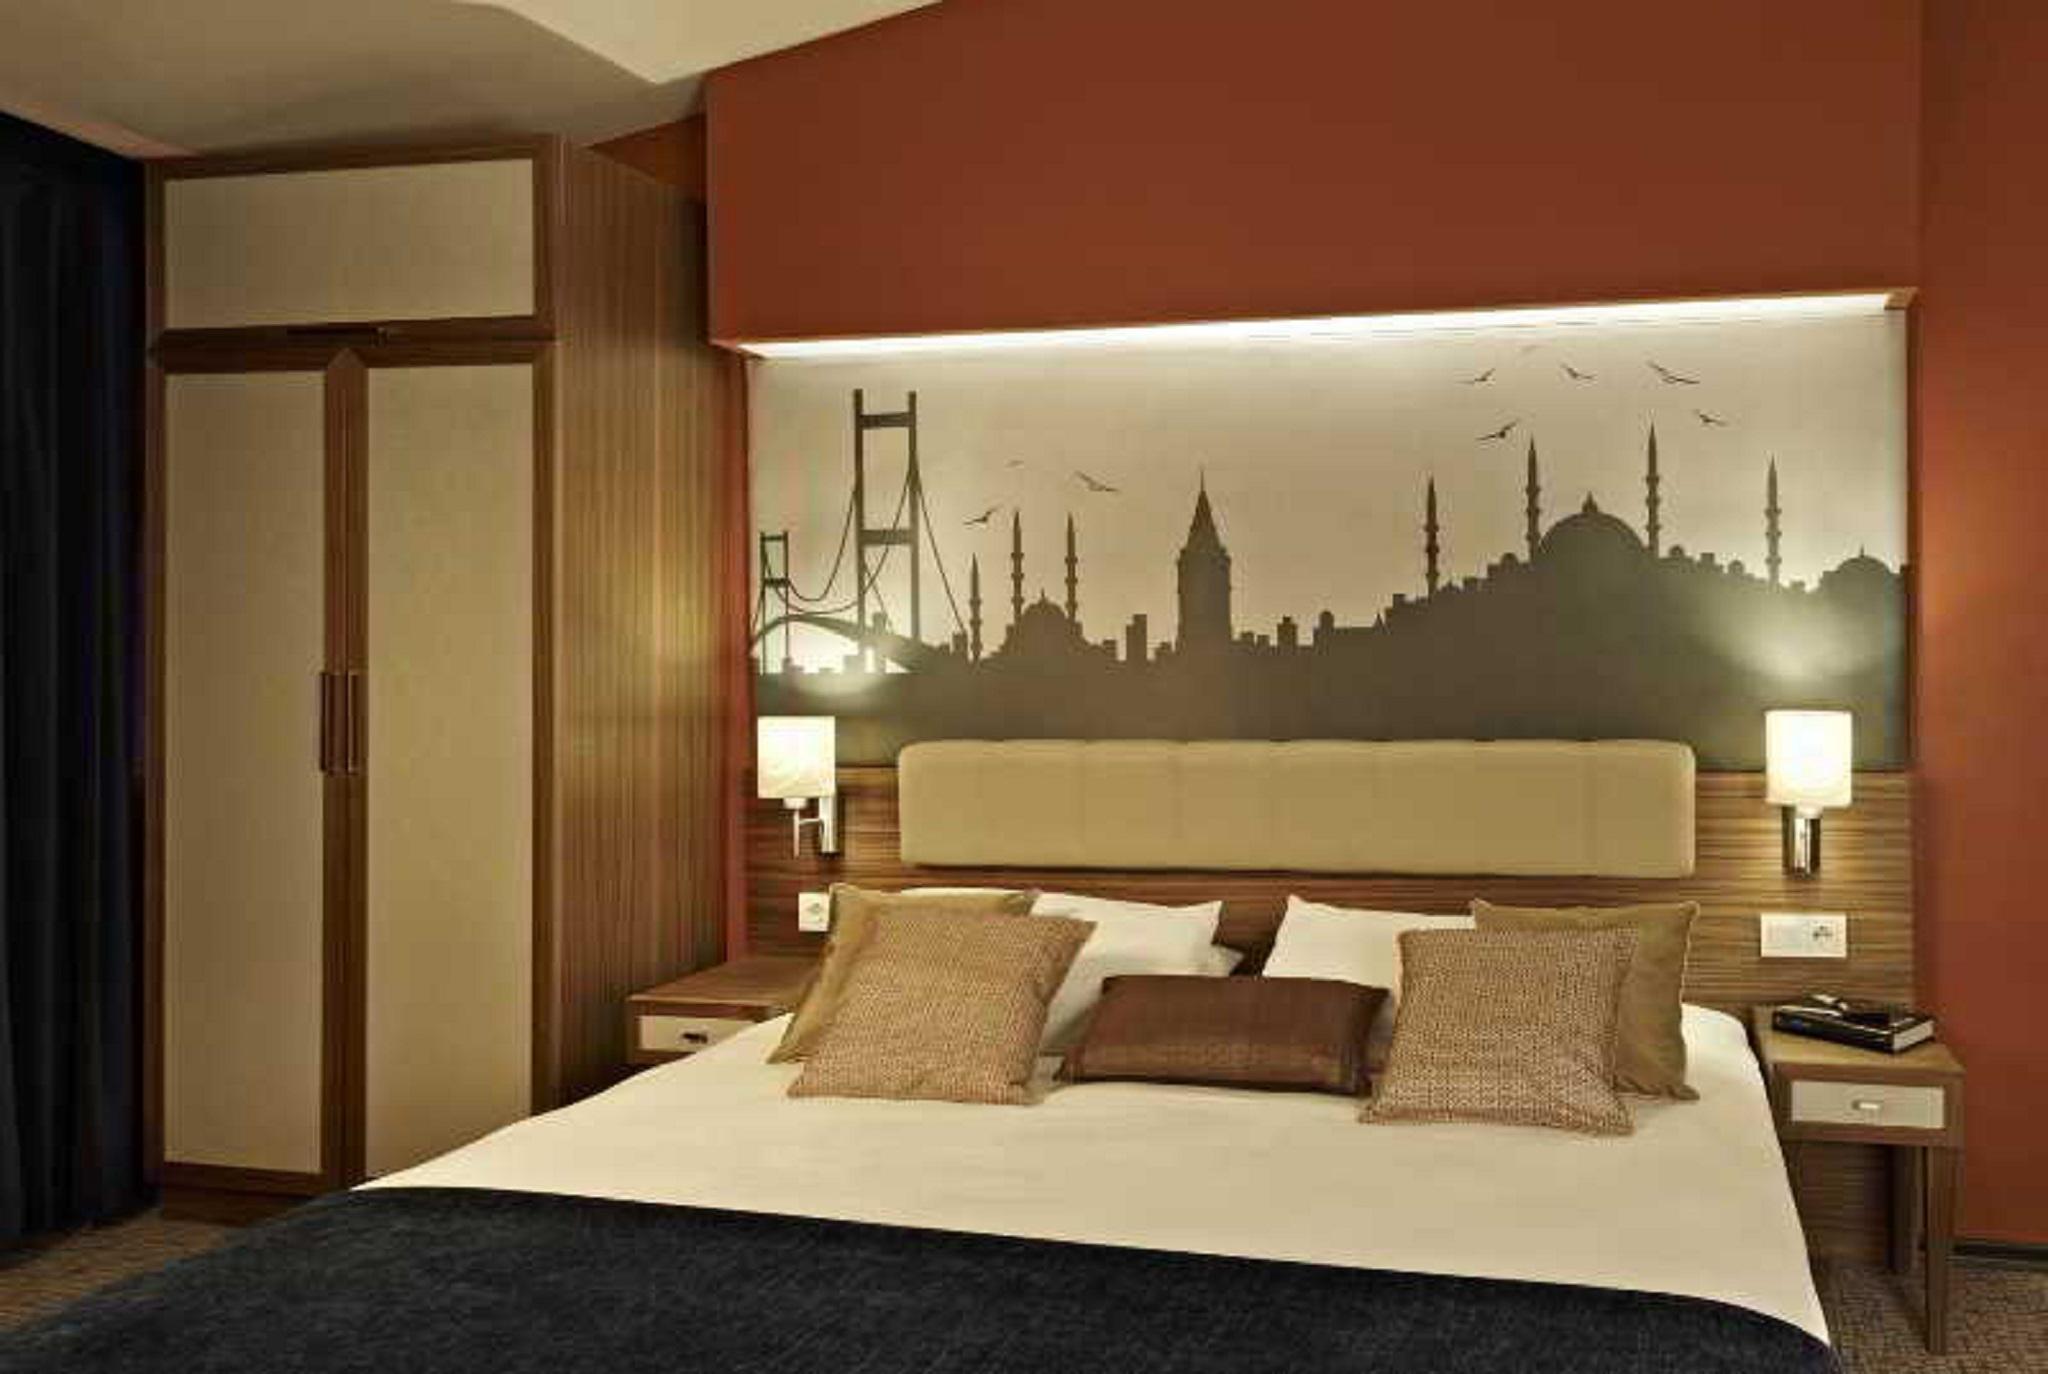 Lapis Inn Hotel & Spa Istanbul Exterior photo